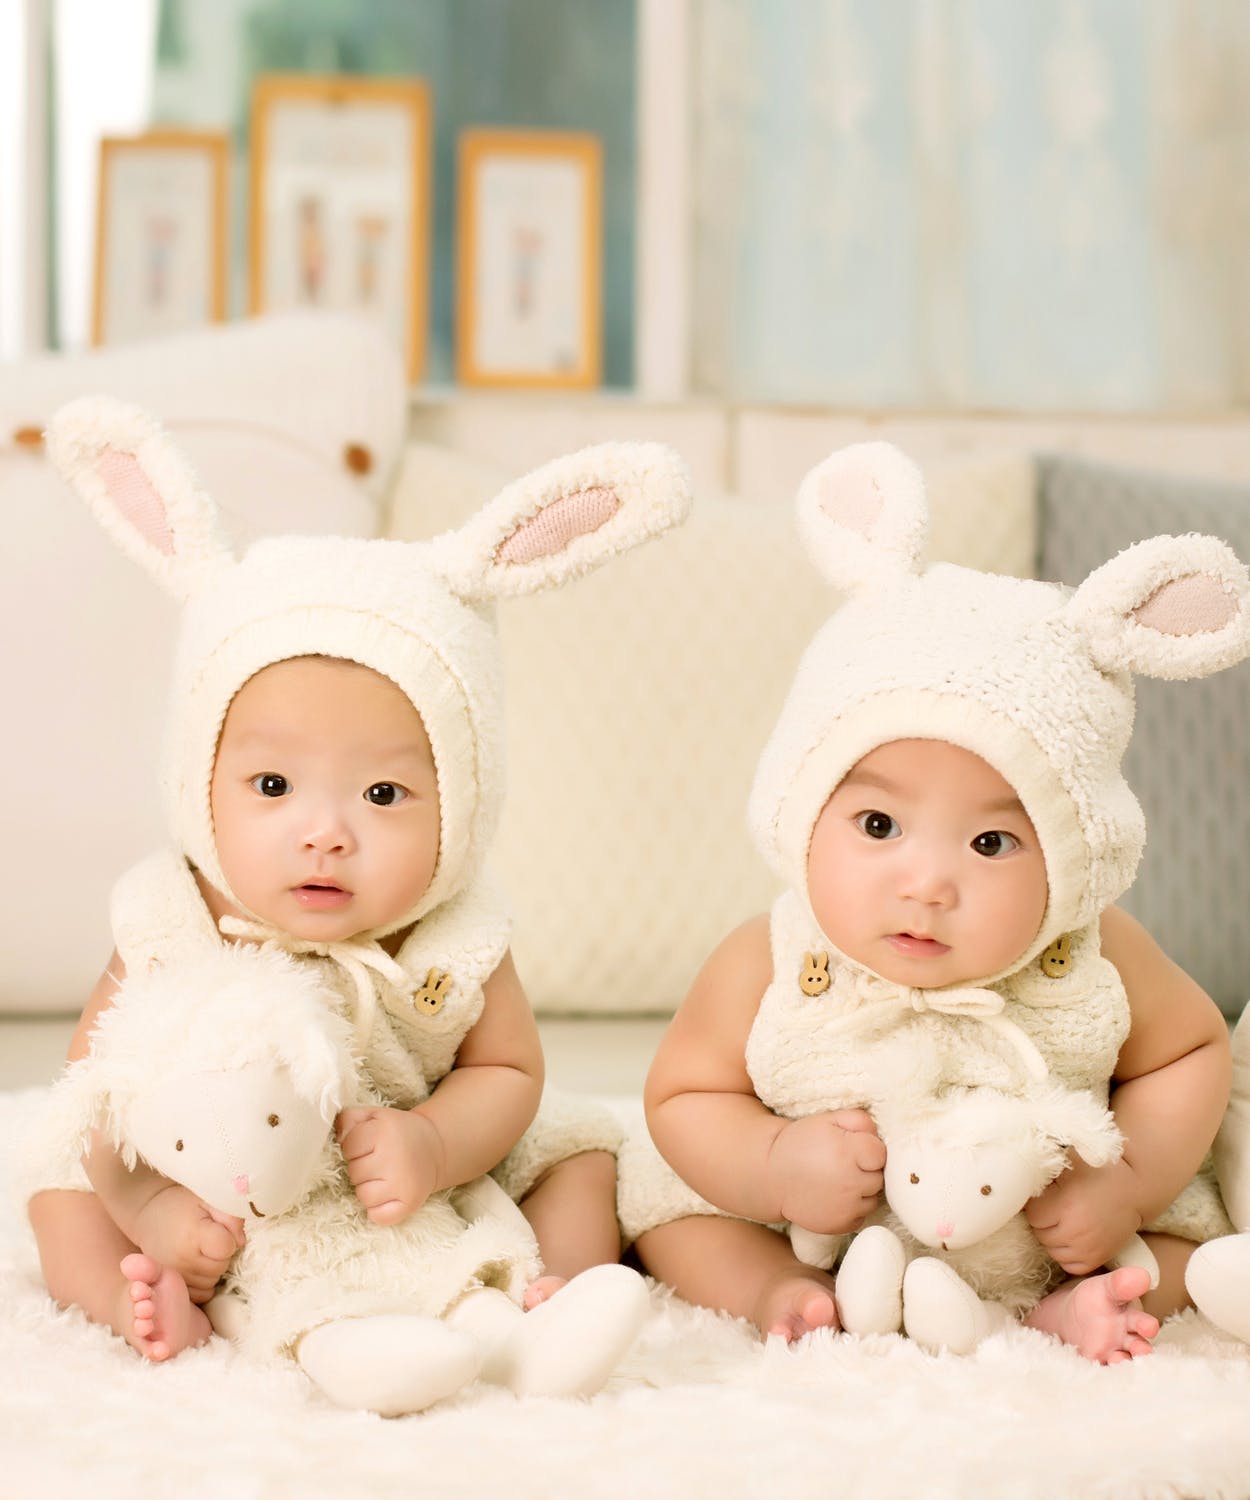 Two babies wearing hats